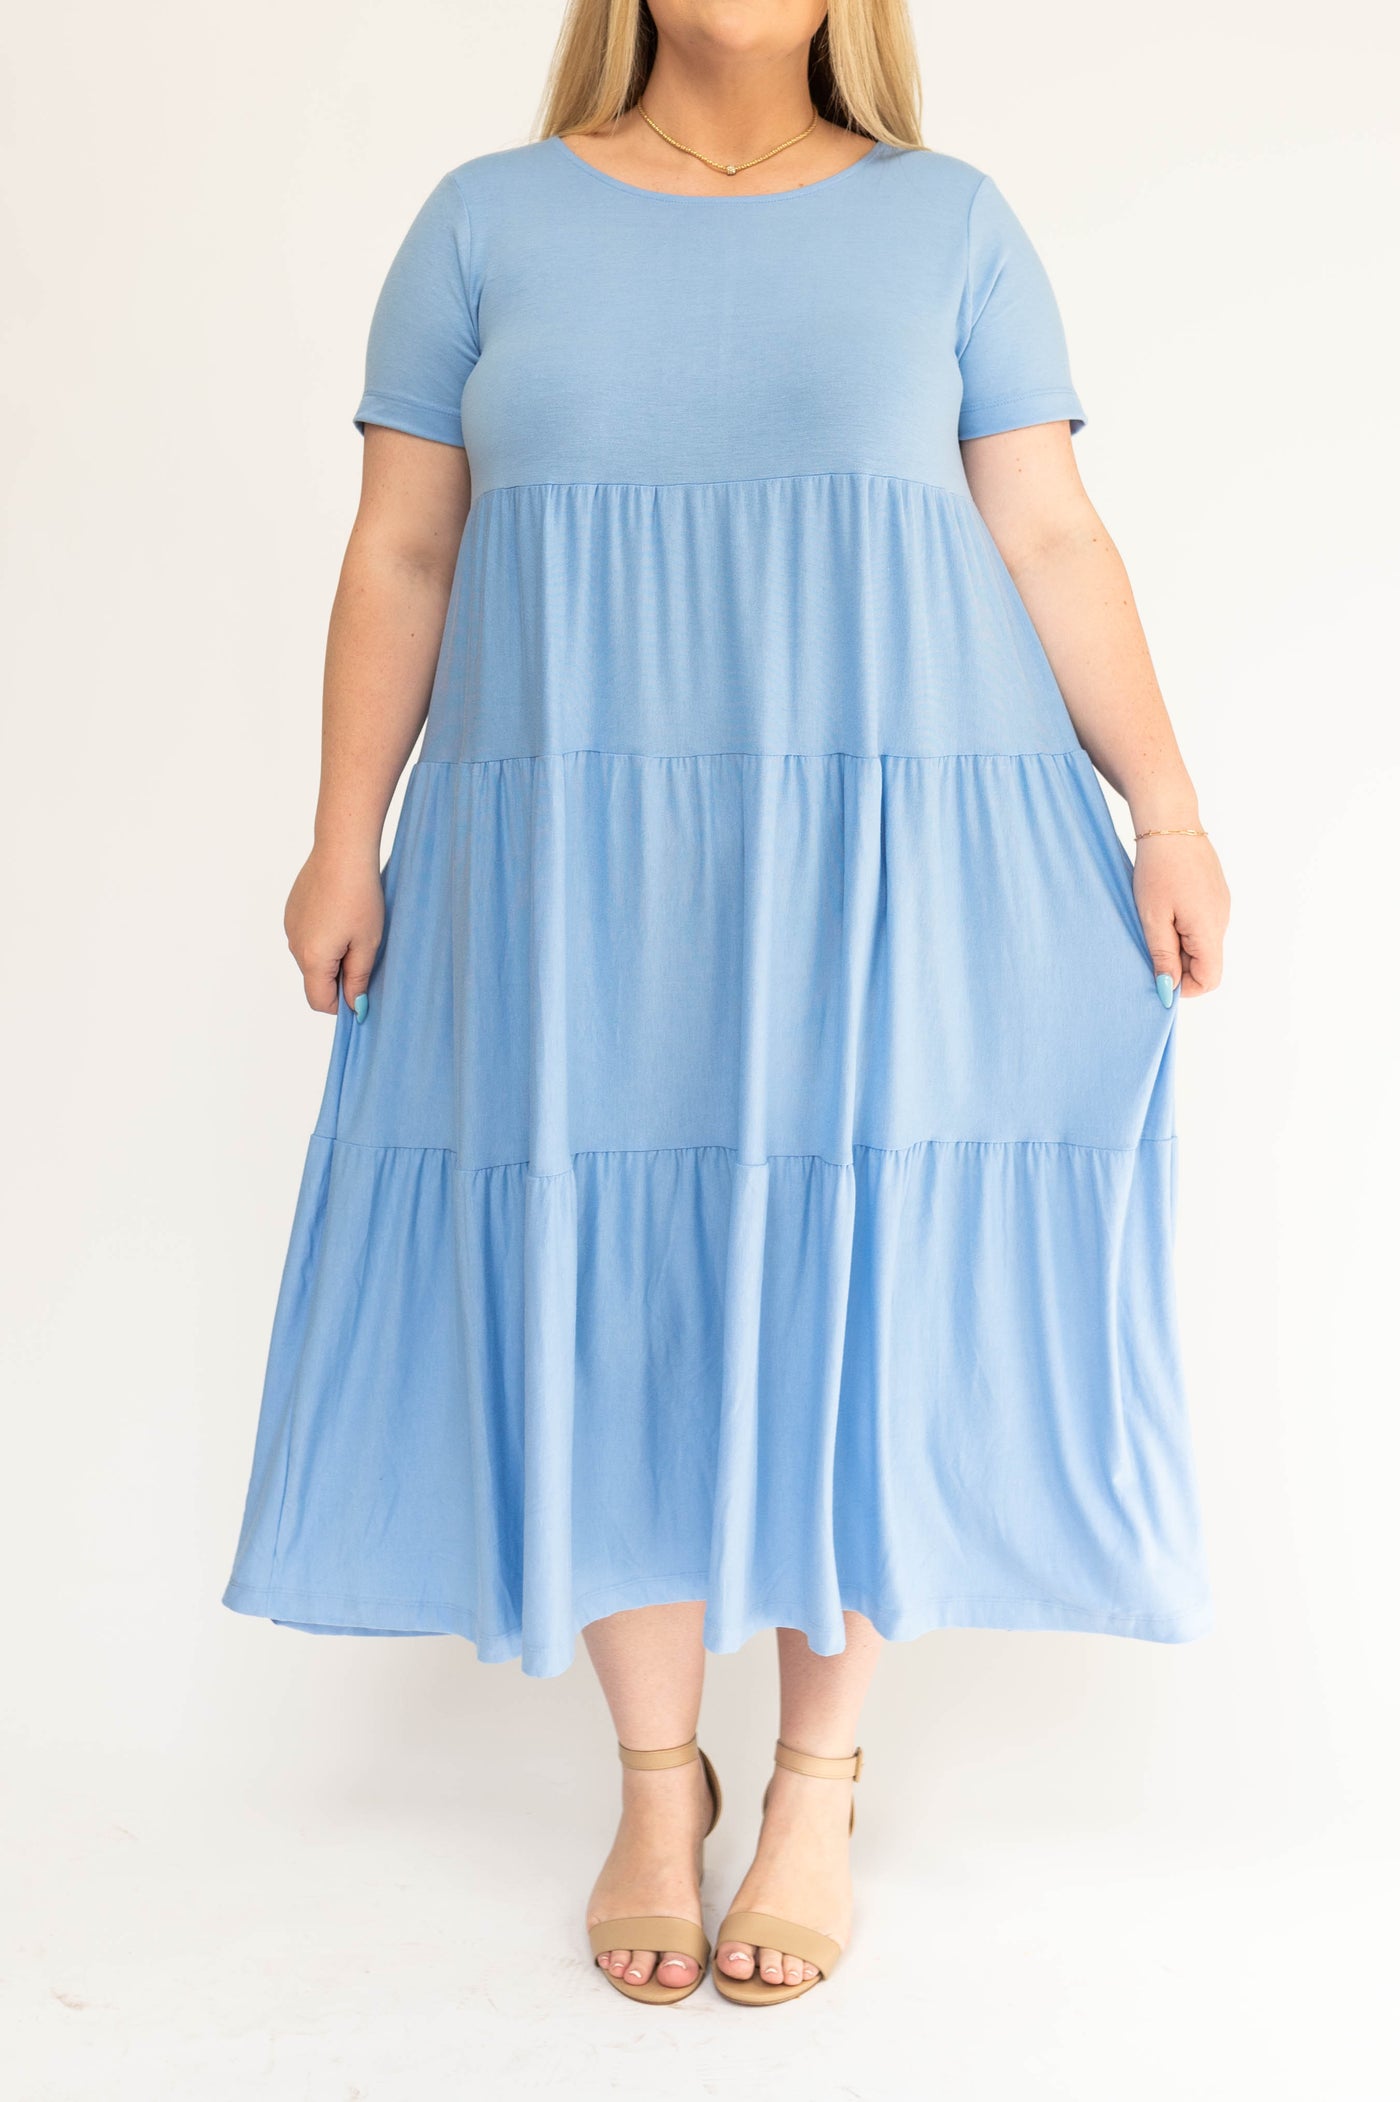 Short sleeve plus size blue dress